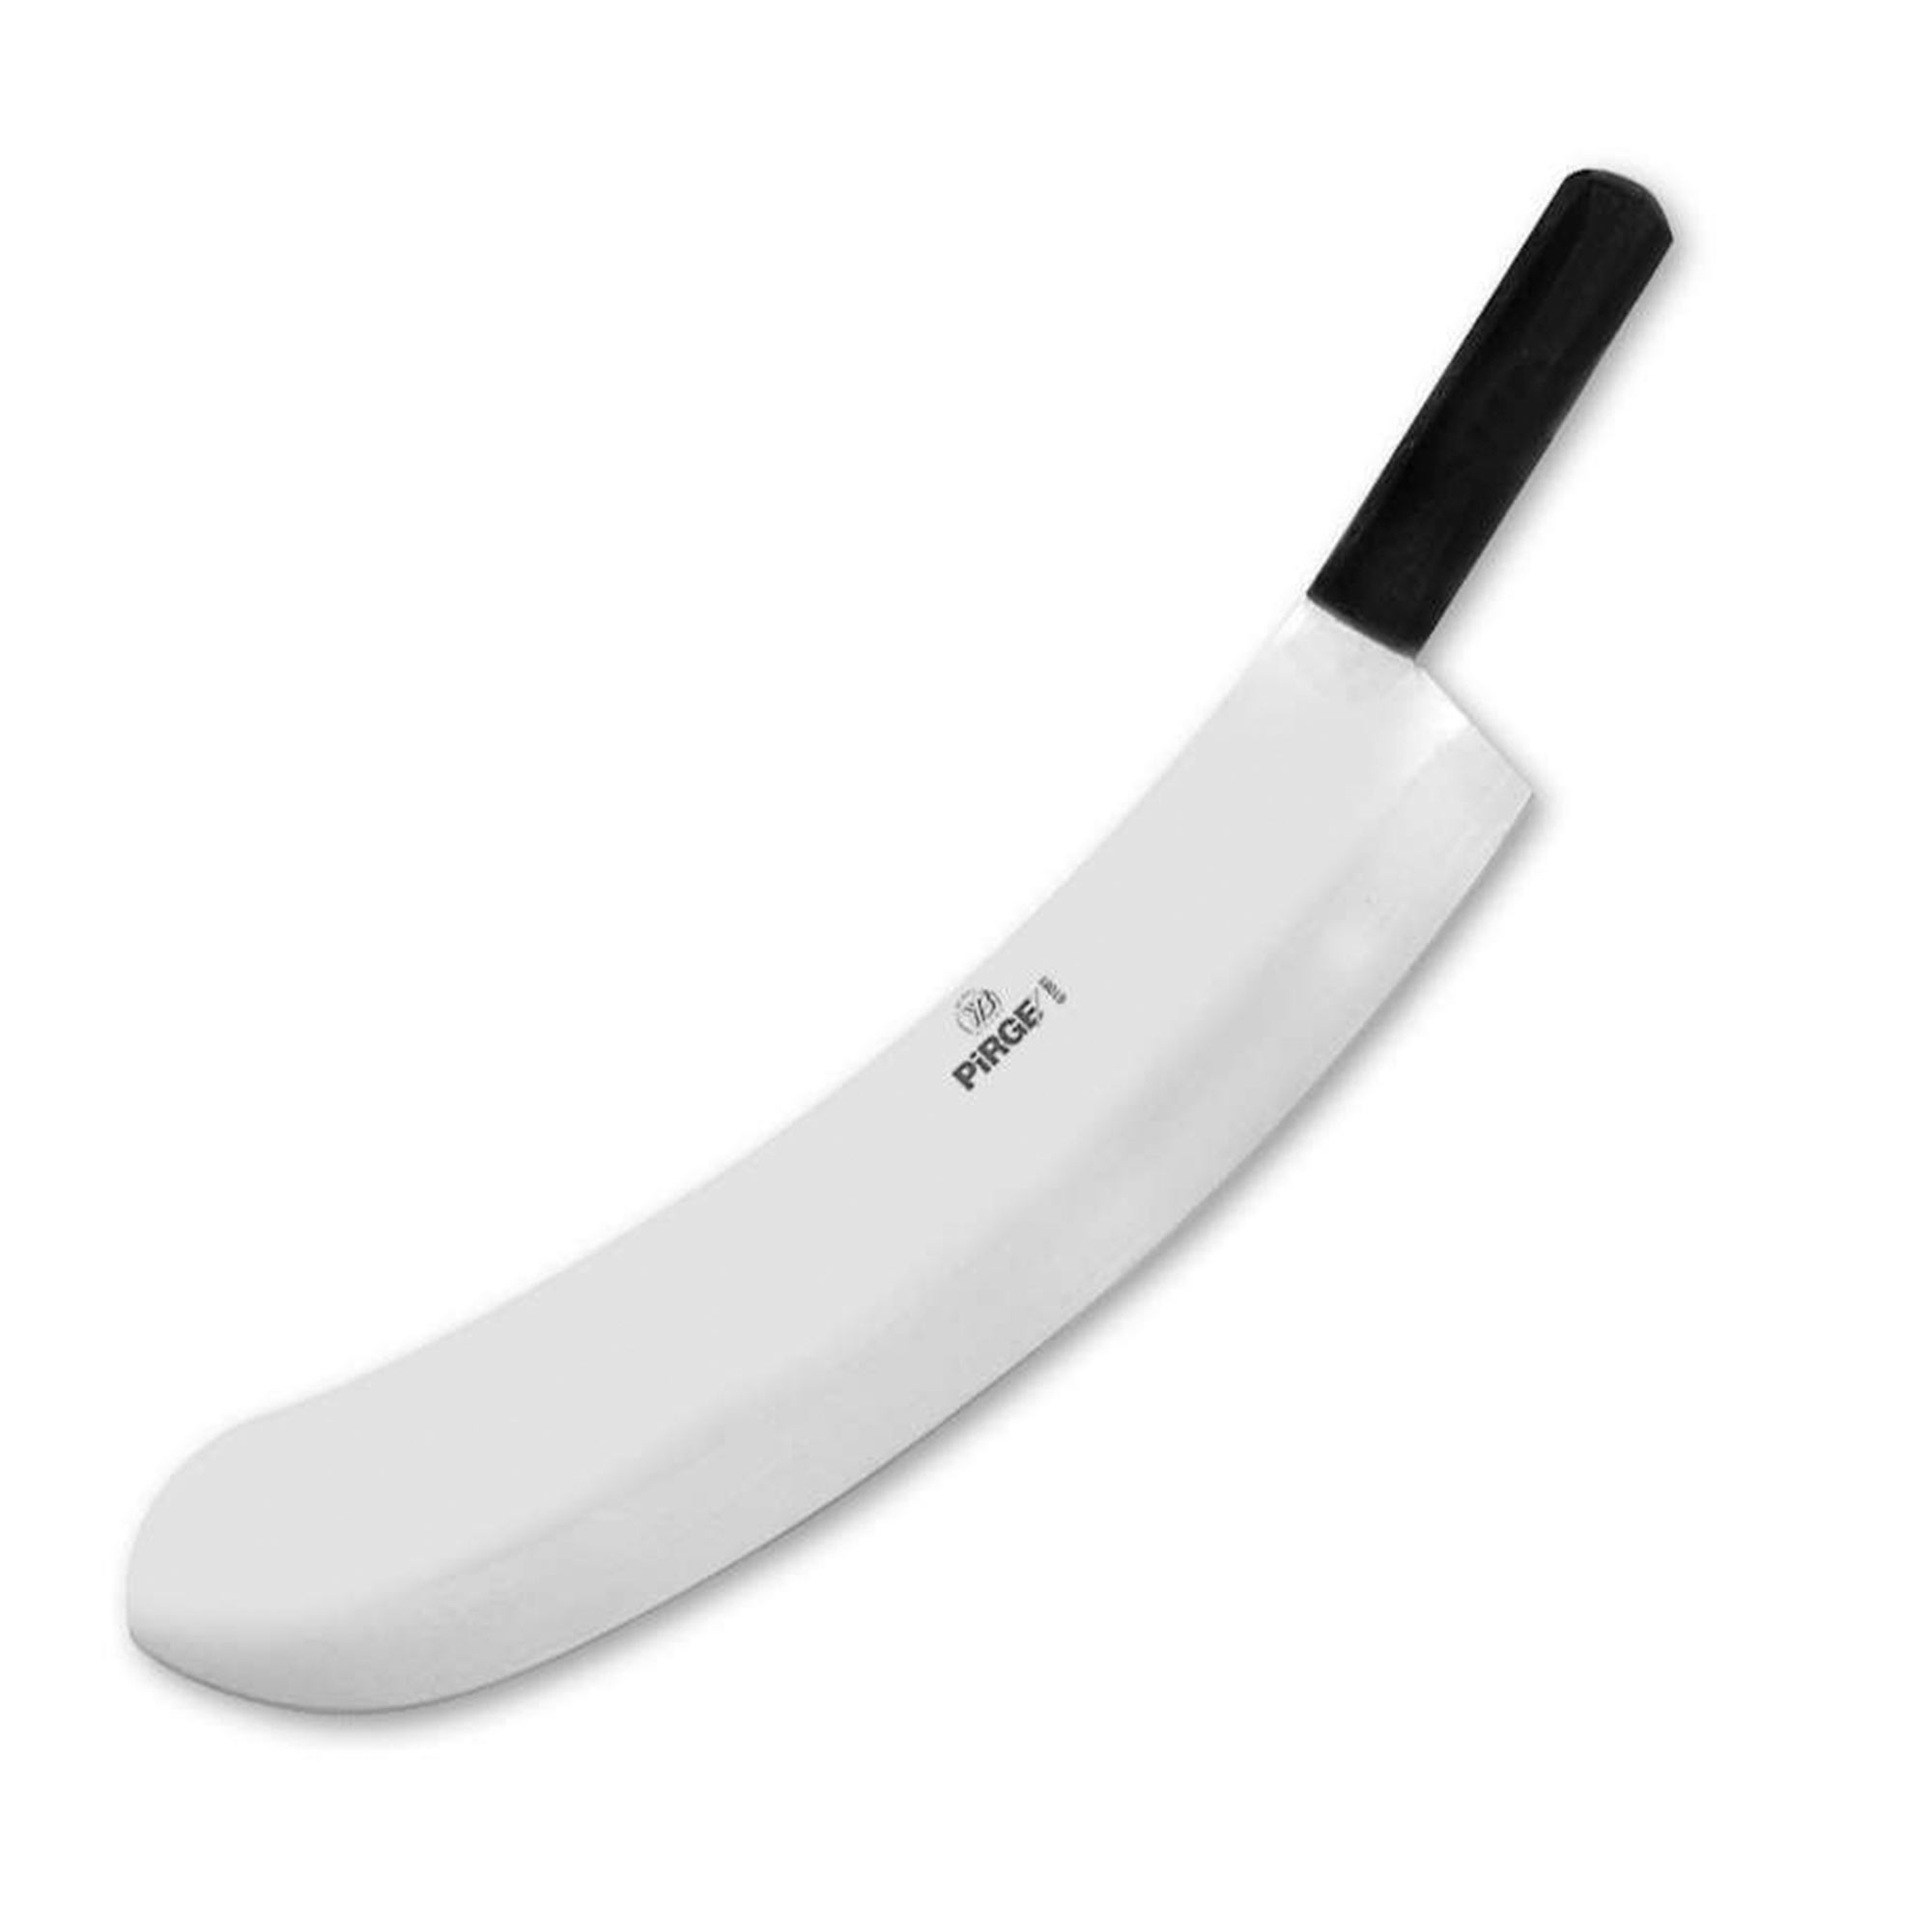 Нож для рубки Pirge 61081 45 см, цвет серебряный - фото 1